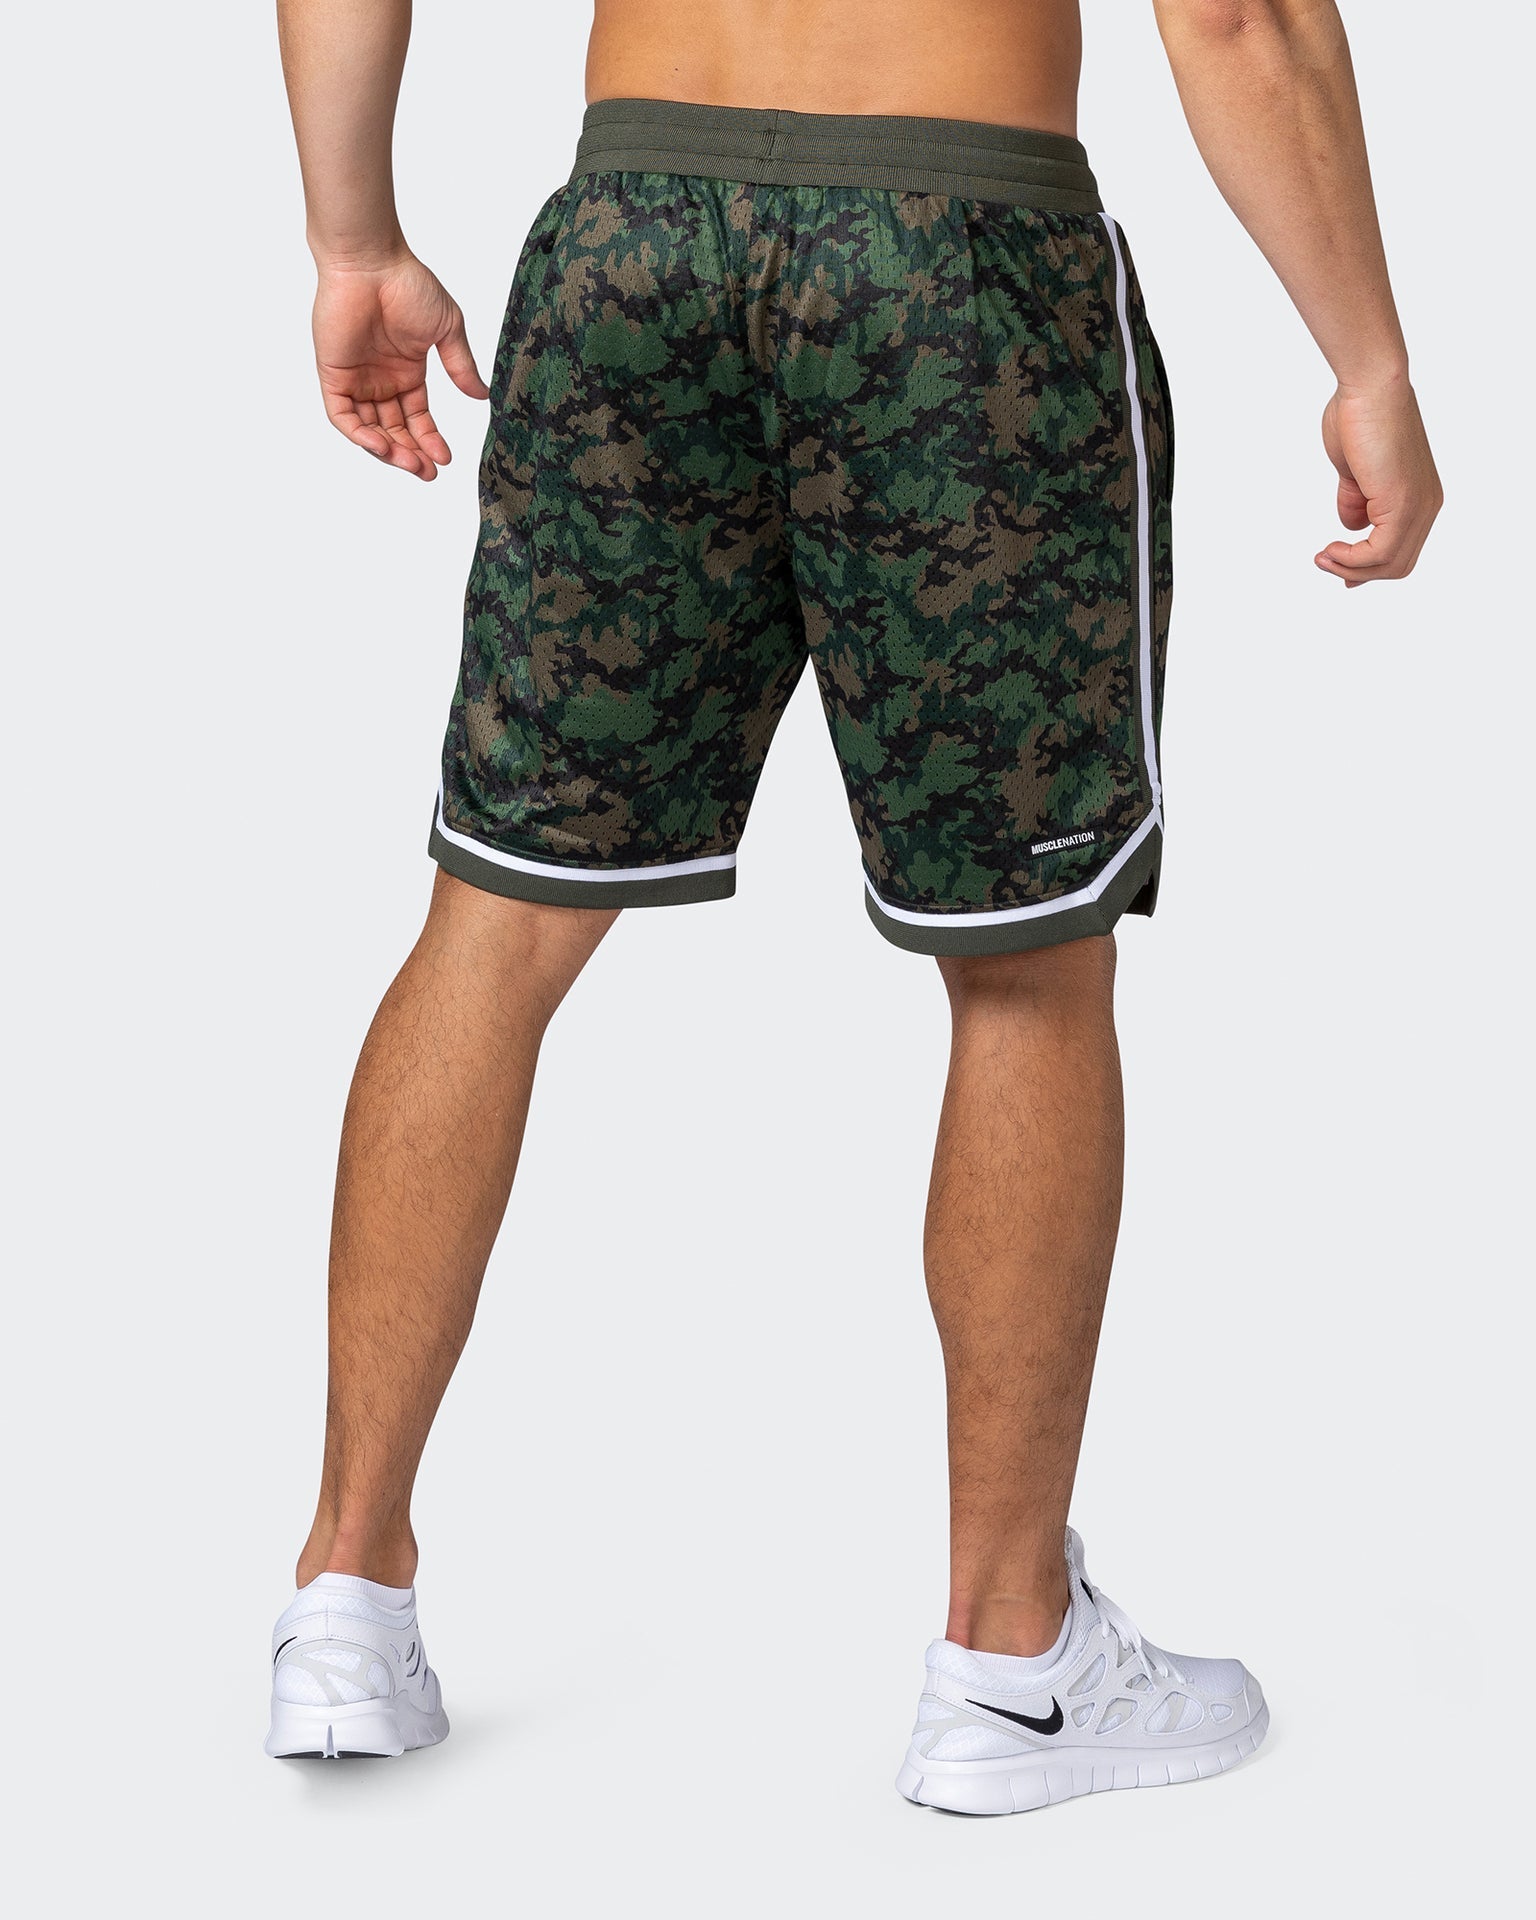 musclenation Shorts Mens 8" Basketball Shorts - Dark Khaki Camo Print